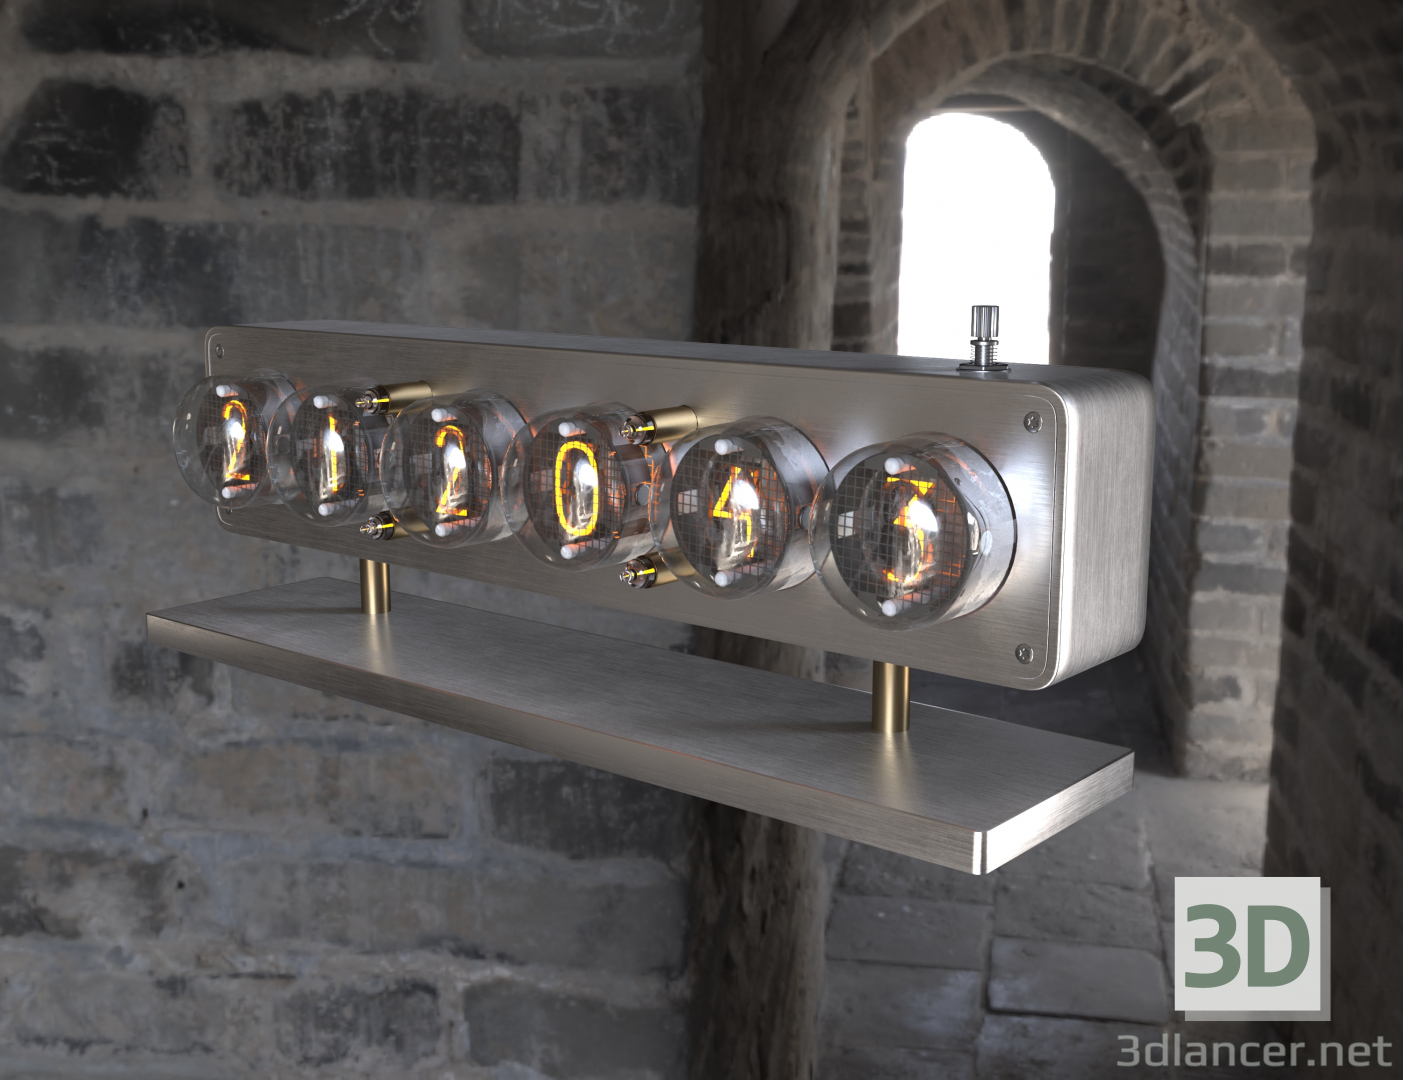 3d Clock on lamps IN-4.IN4 Glow Tube Nixie Electron Tube Clock model buy - render